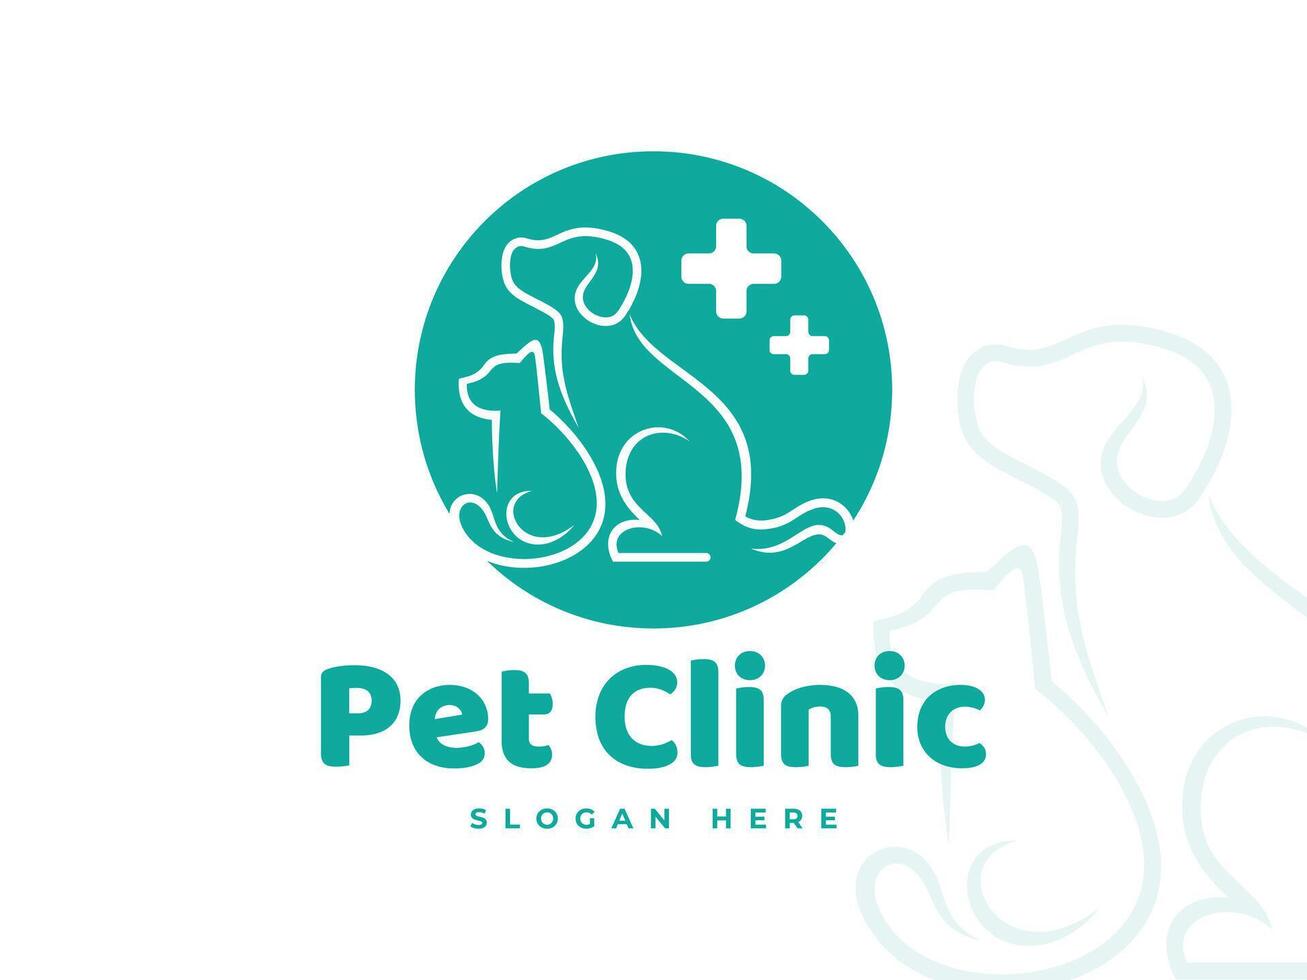 sällskapsdjur klinik logotyp vektor